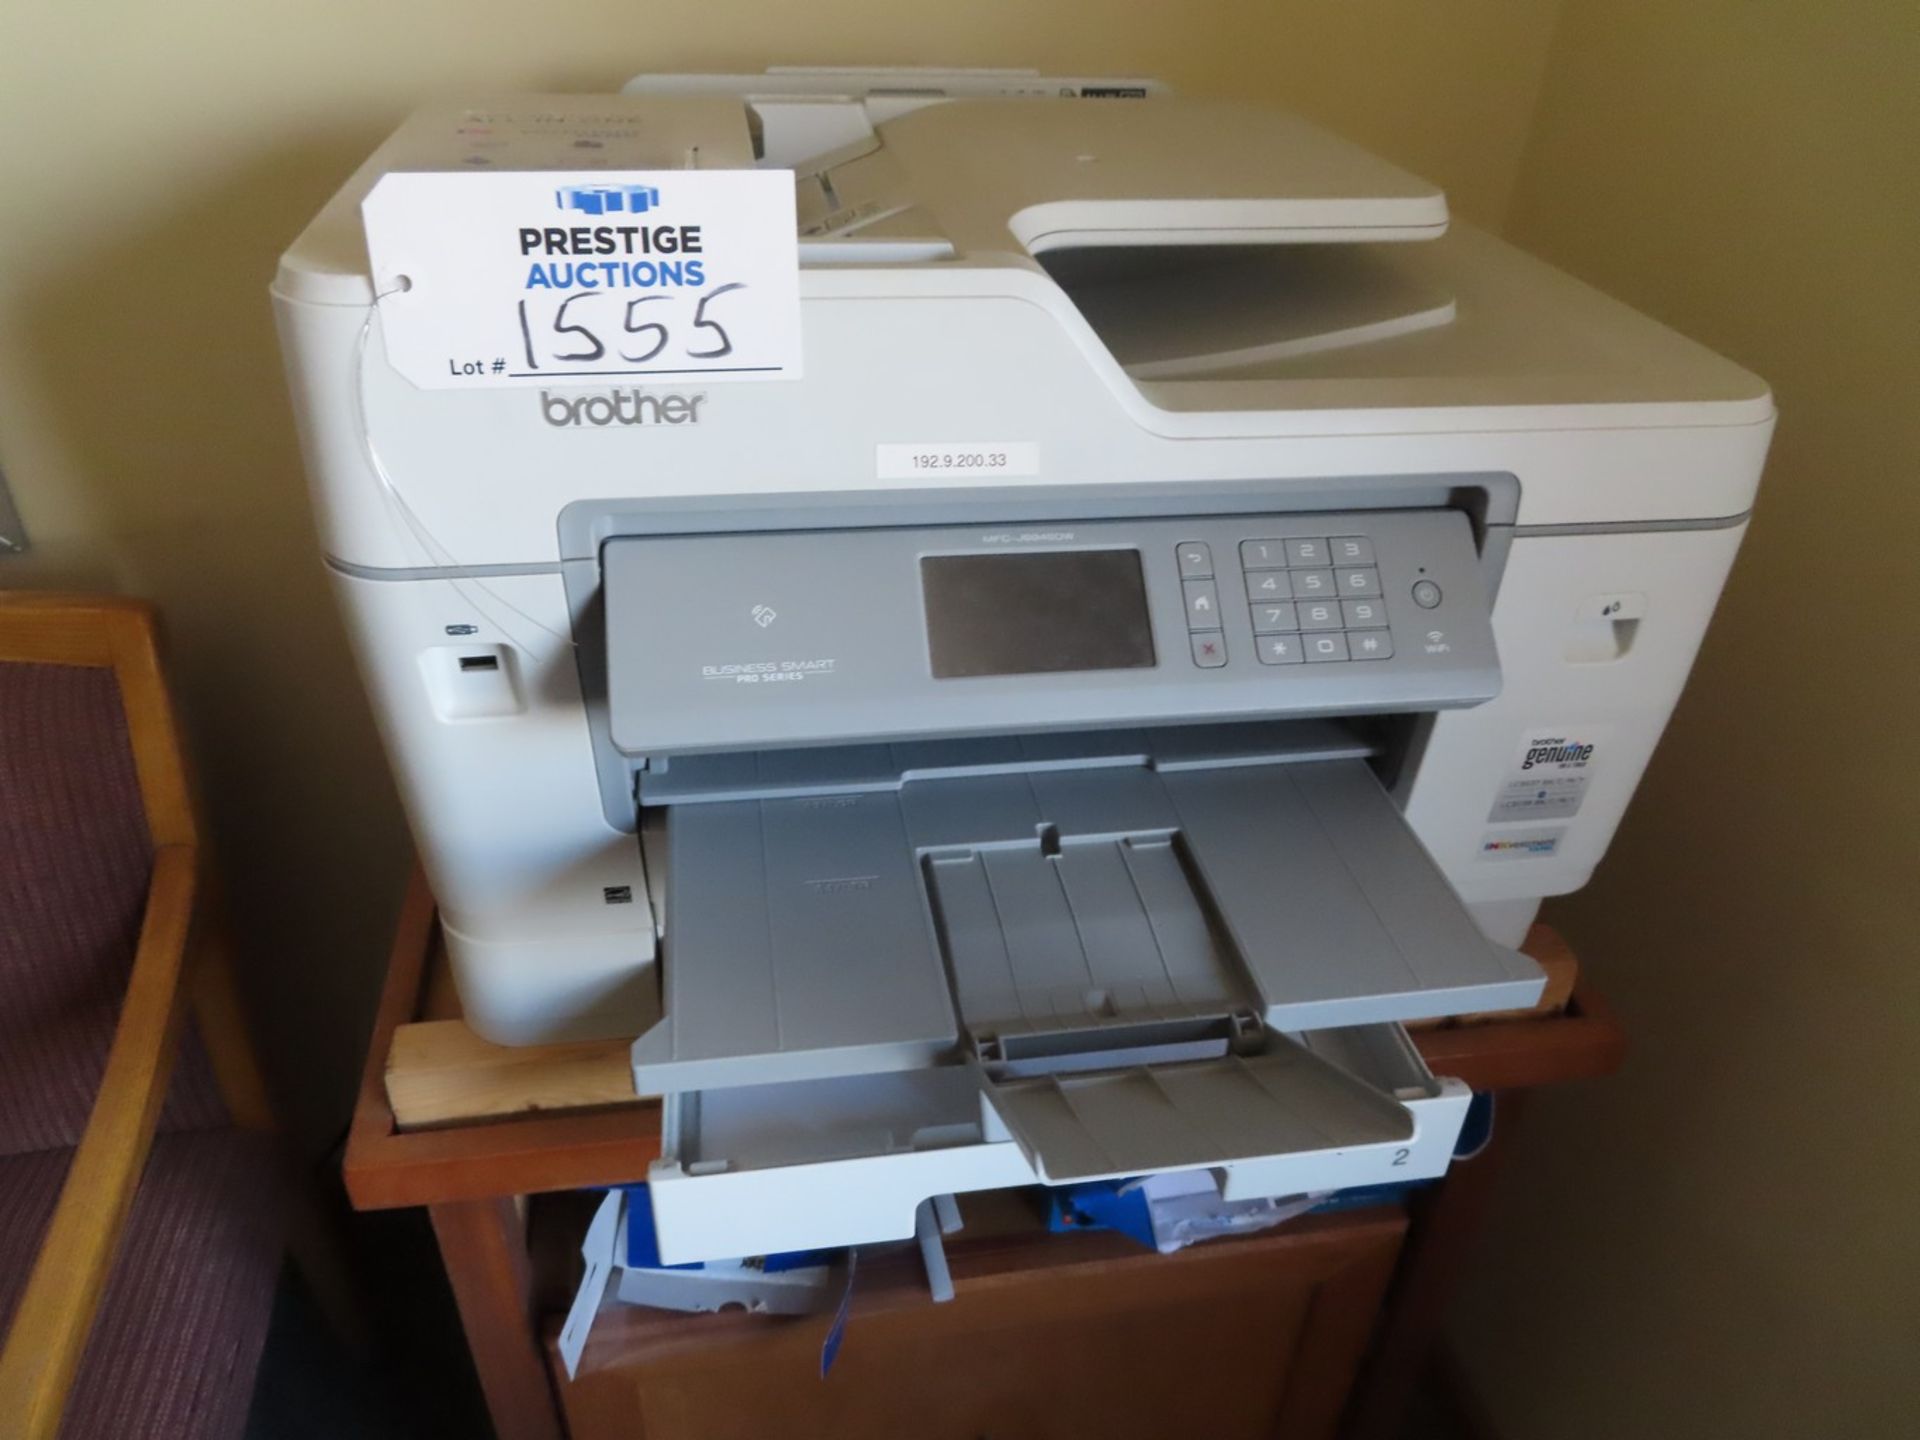 Brother Business Smart Pro MFC J69450W Copier / Printer / Fax